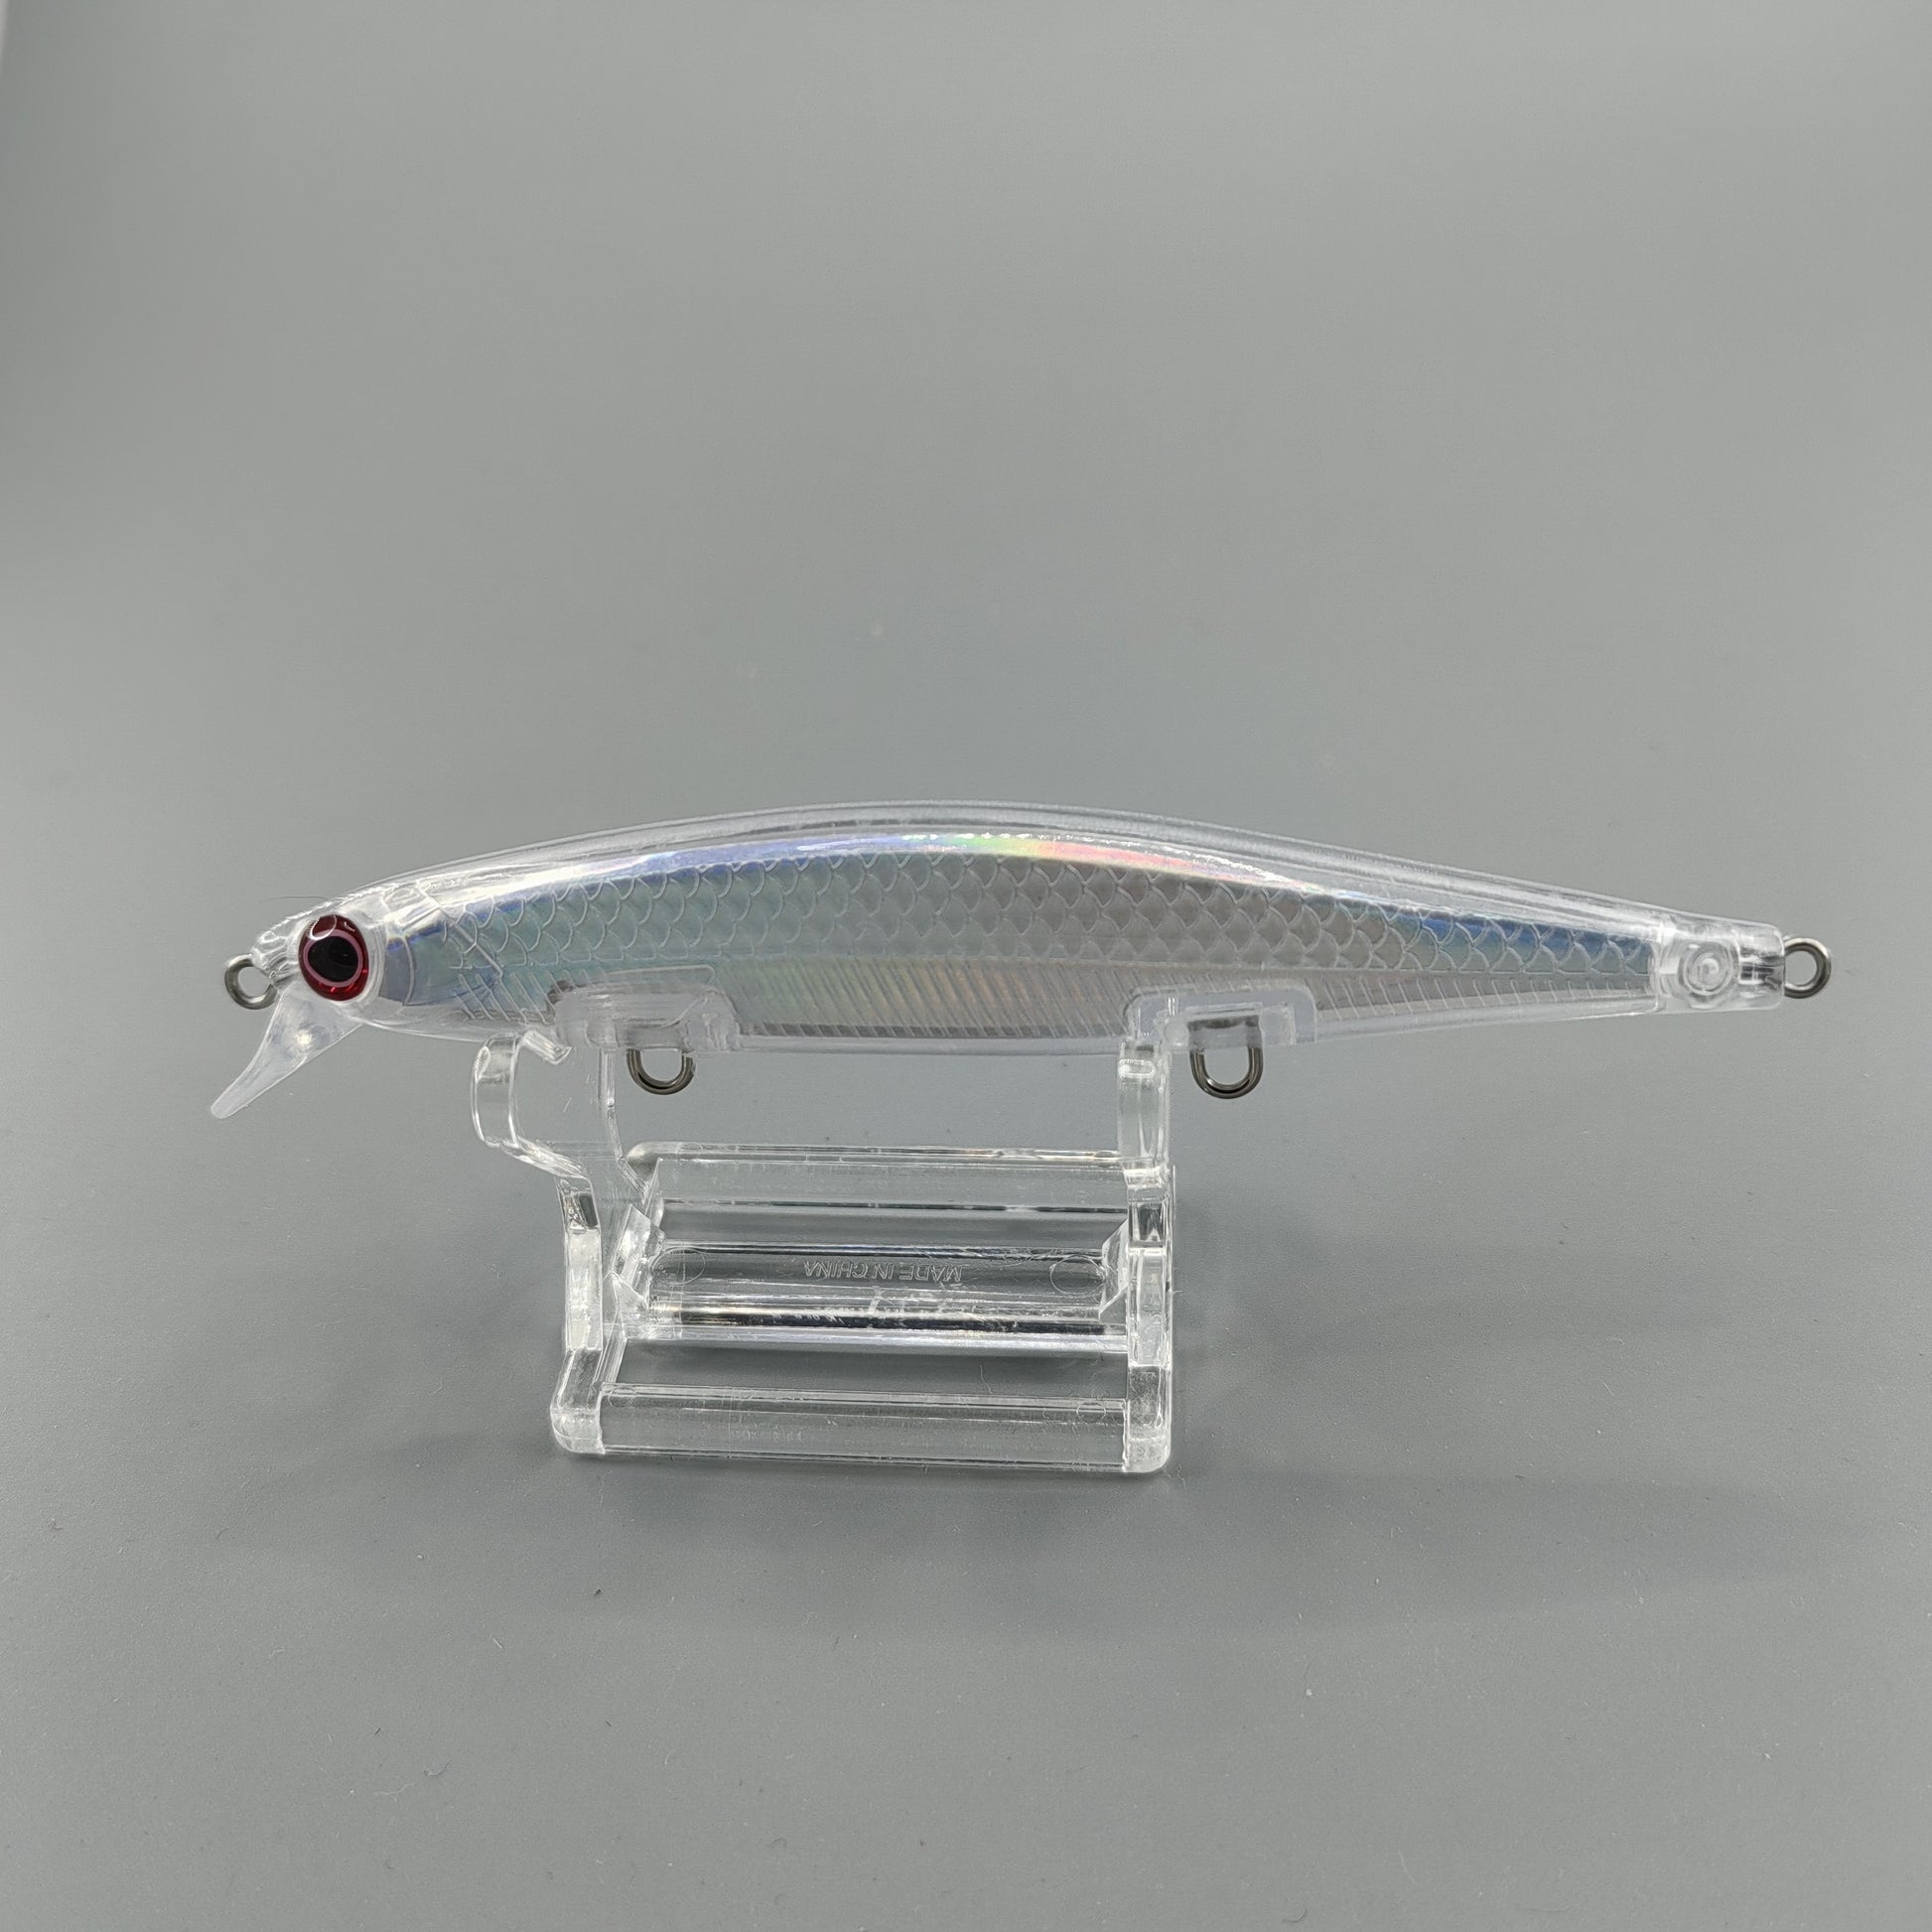 M013 110mm 10.8g Unpainted Minnow Plastic Fishing Lure Blank